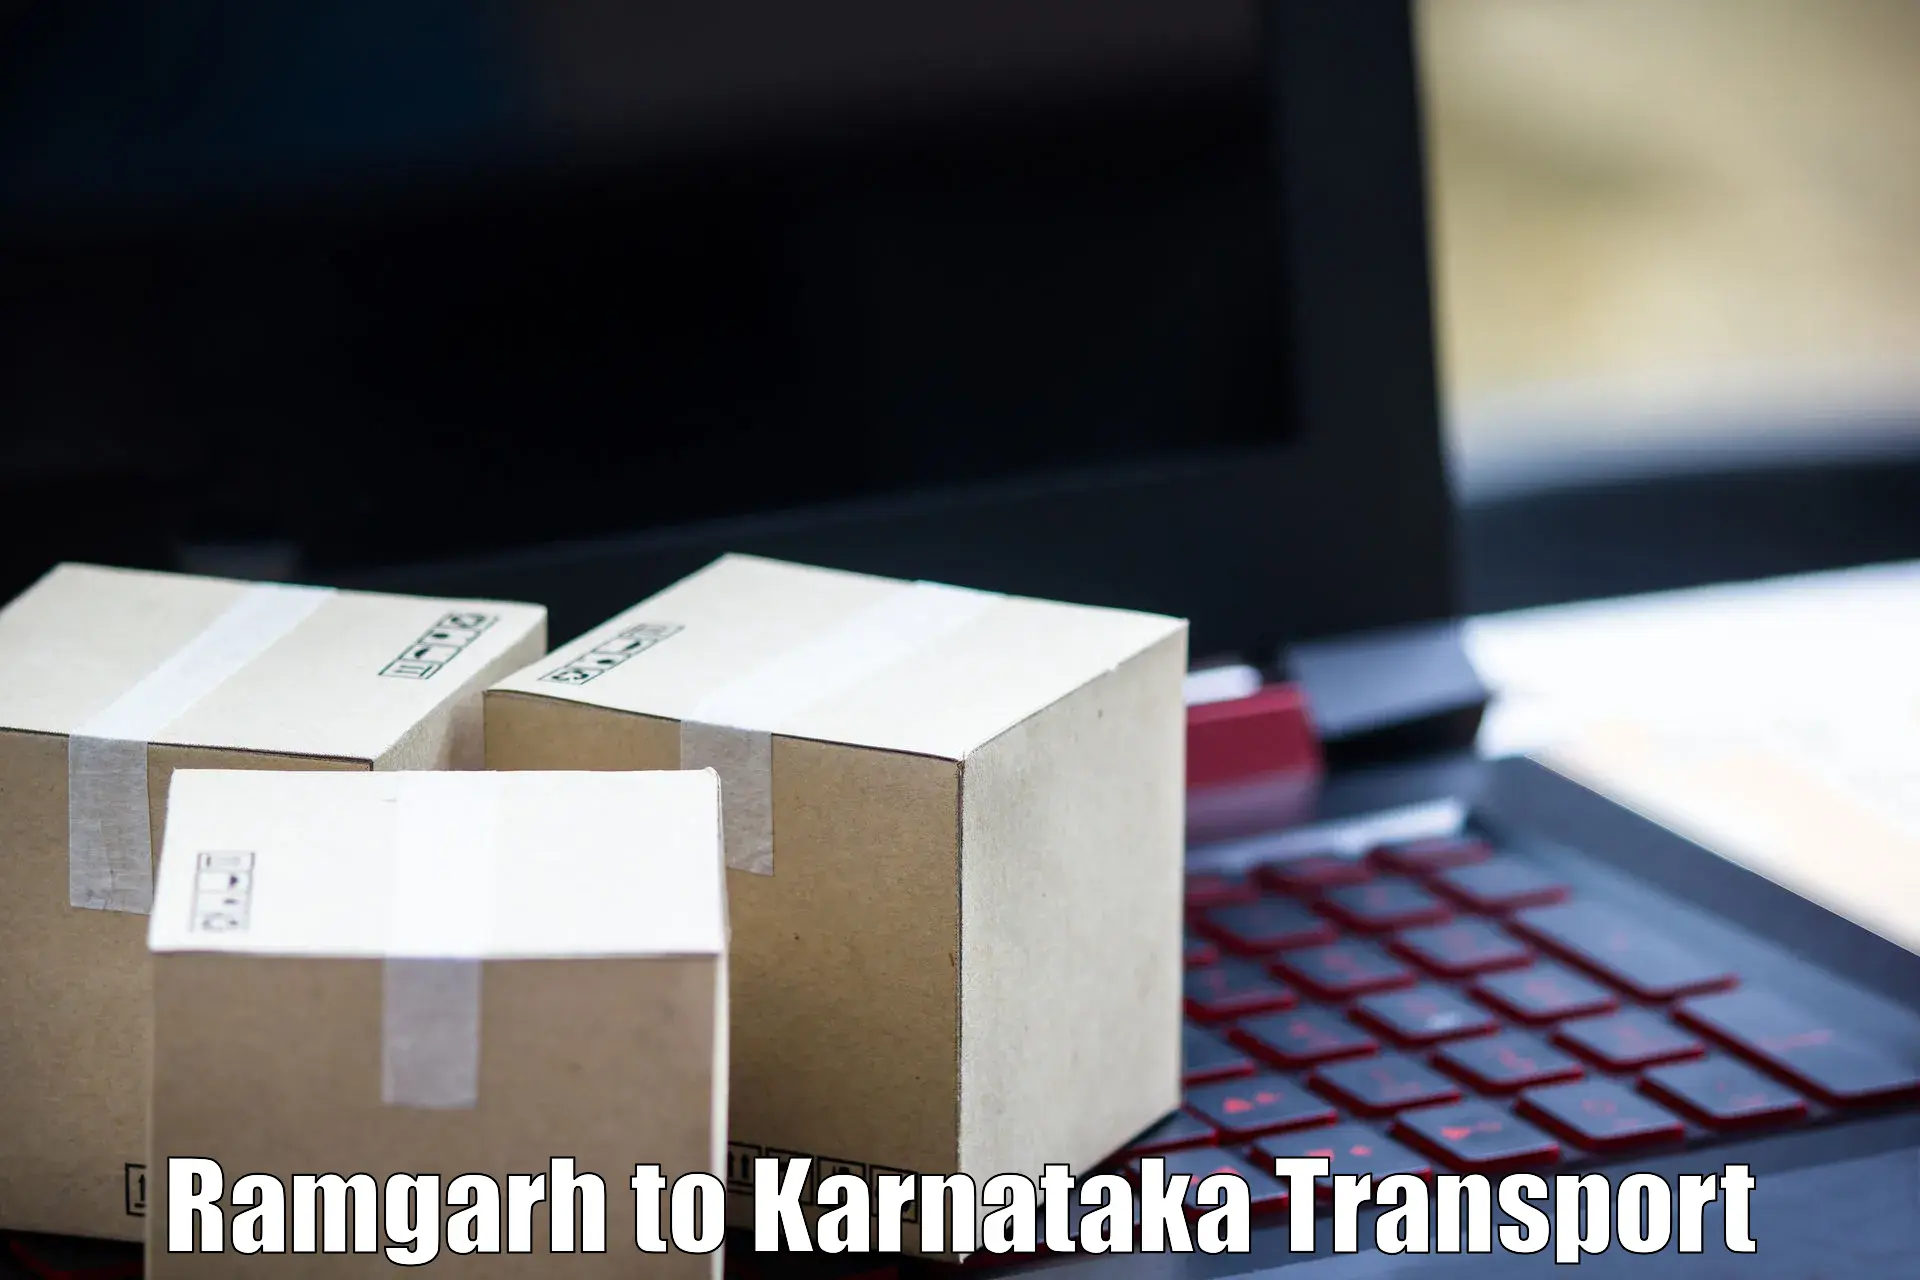 Online transport service Ramgarh to Kanjarakatte